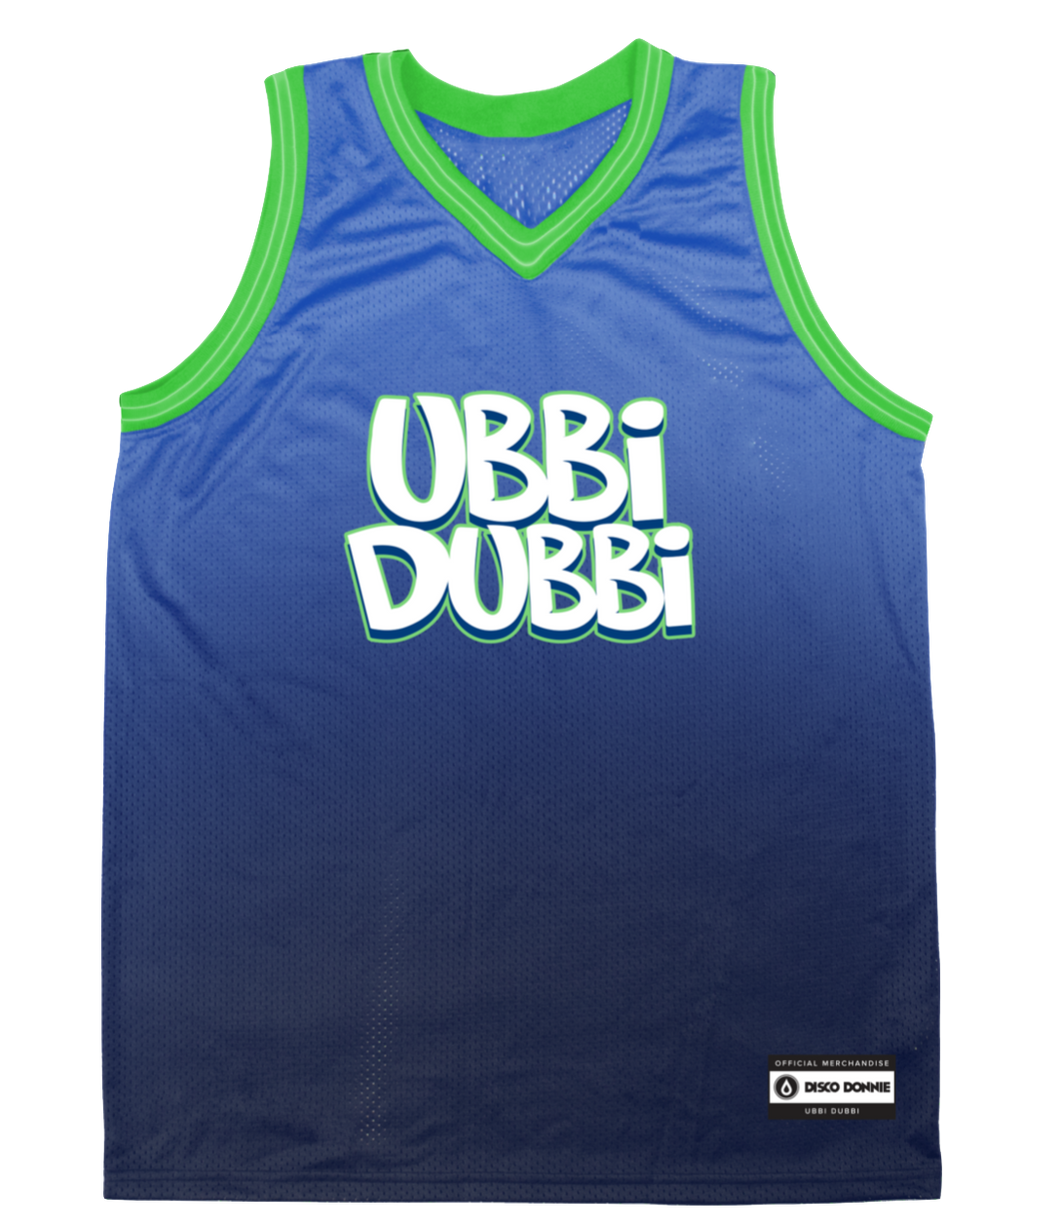 Ubbi Dubbi 2021 Basketball Jersey